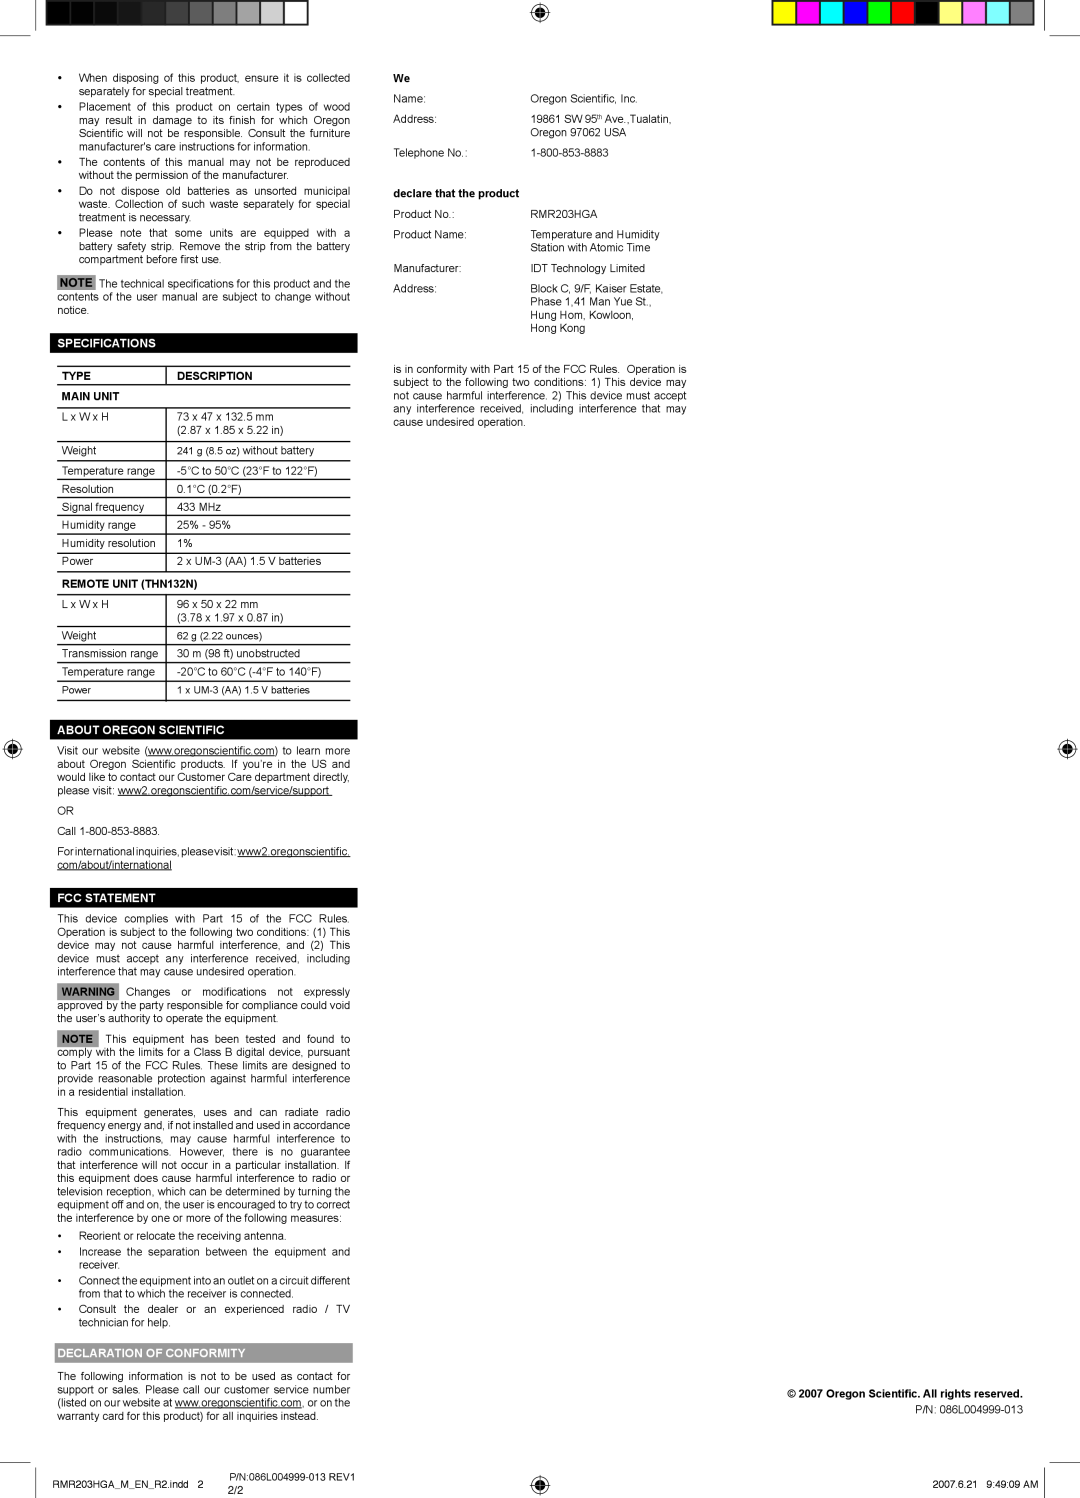 Oregon Scientific RMR203HGA Specifications, Type, Description, Main Unit, REMOTE UNIT THN132N, About Oregon Scientific 